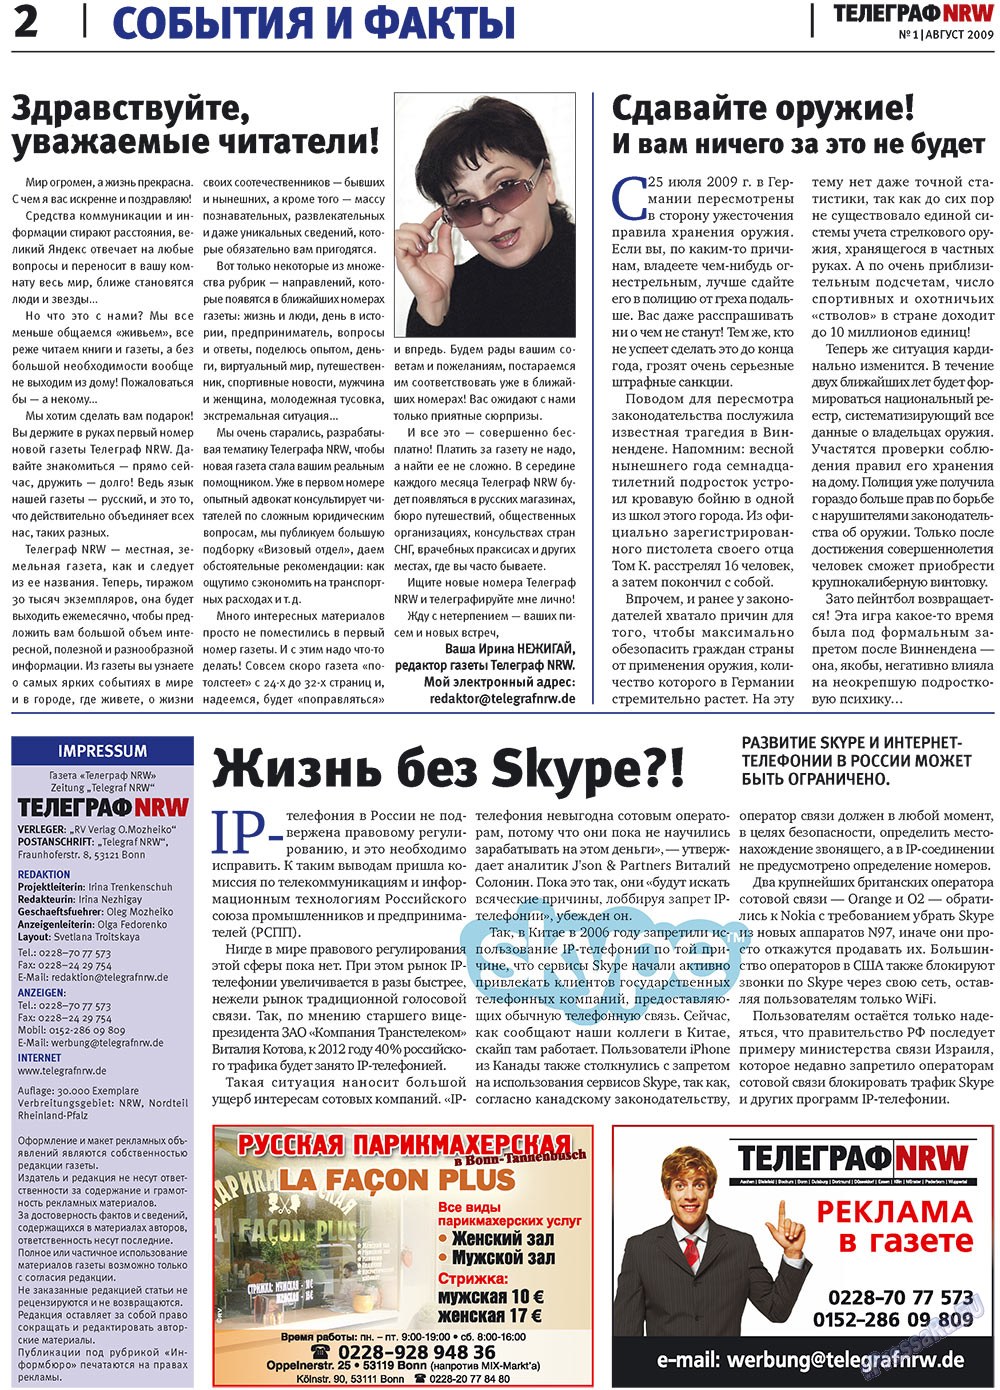 Телеграф NRW, газета. 2009 №1 стр.2